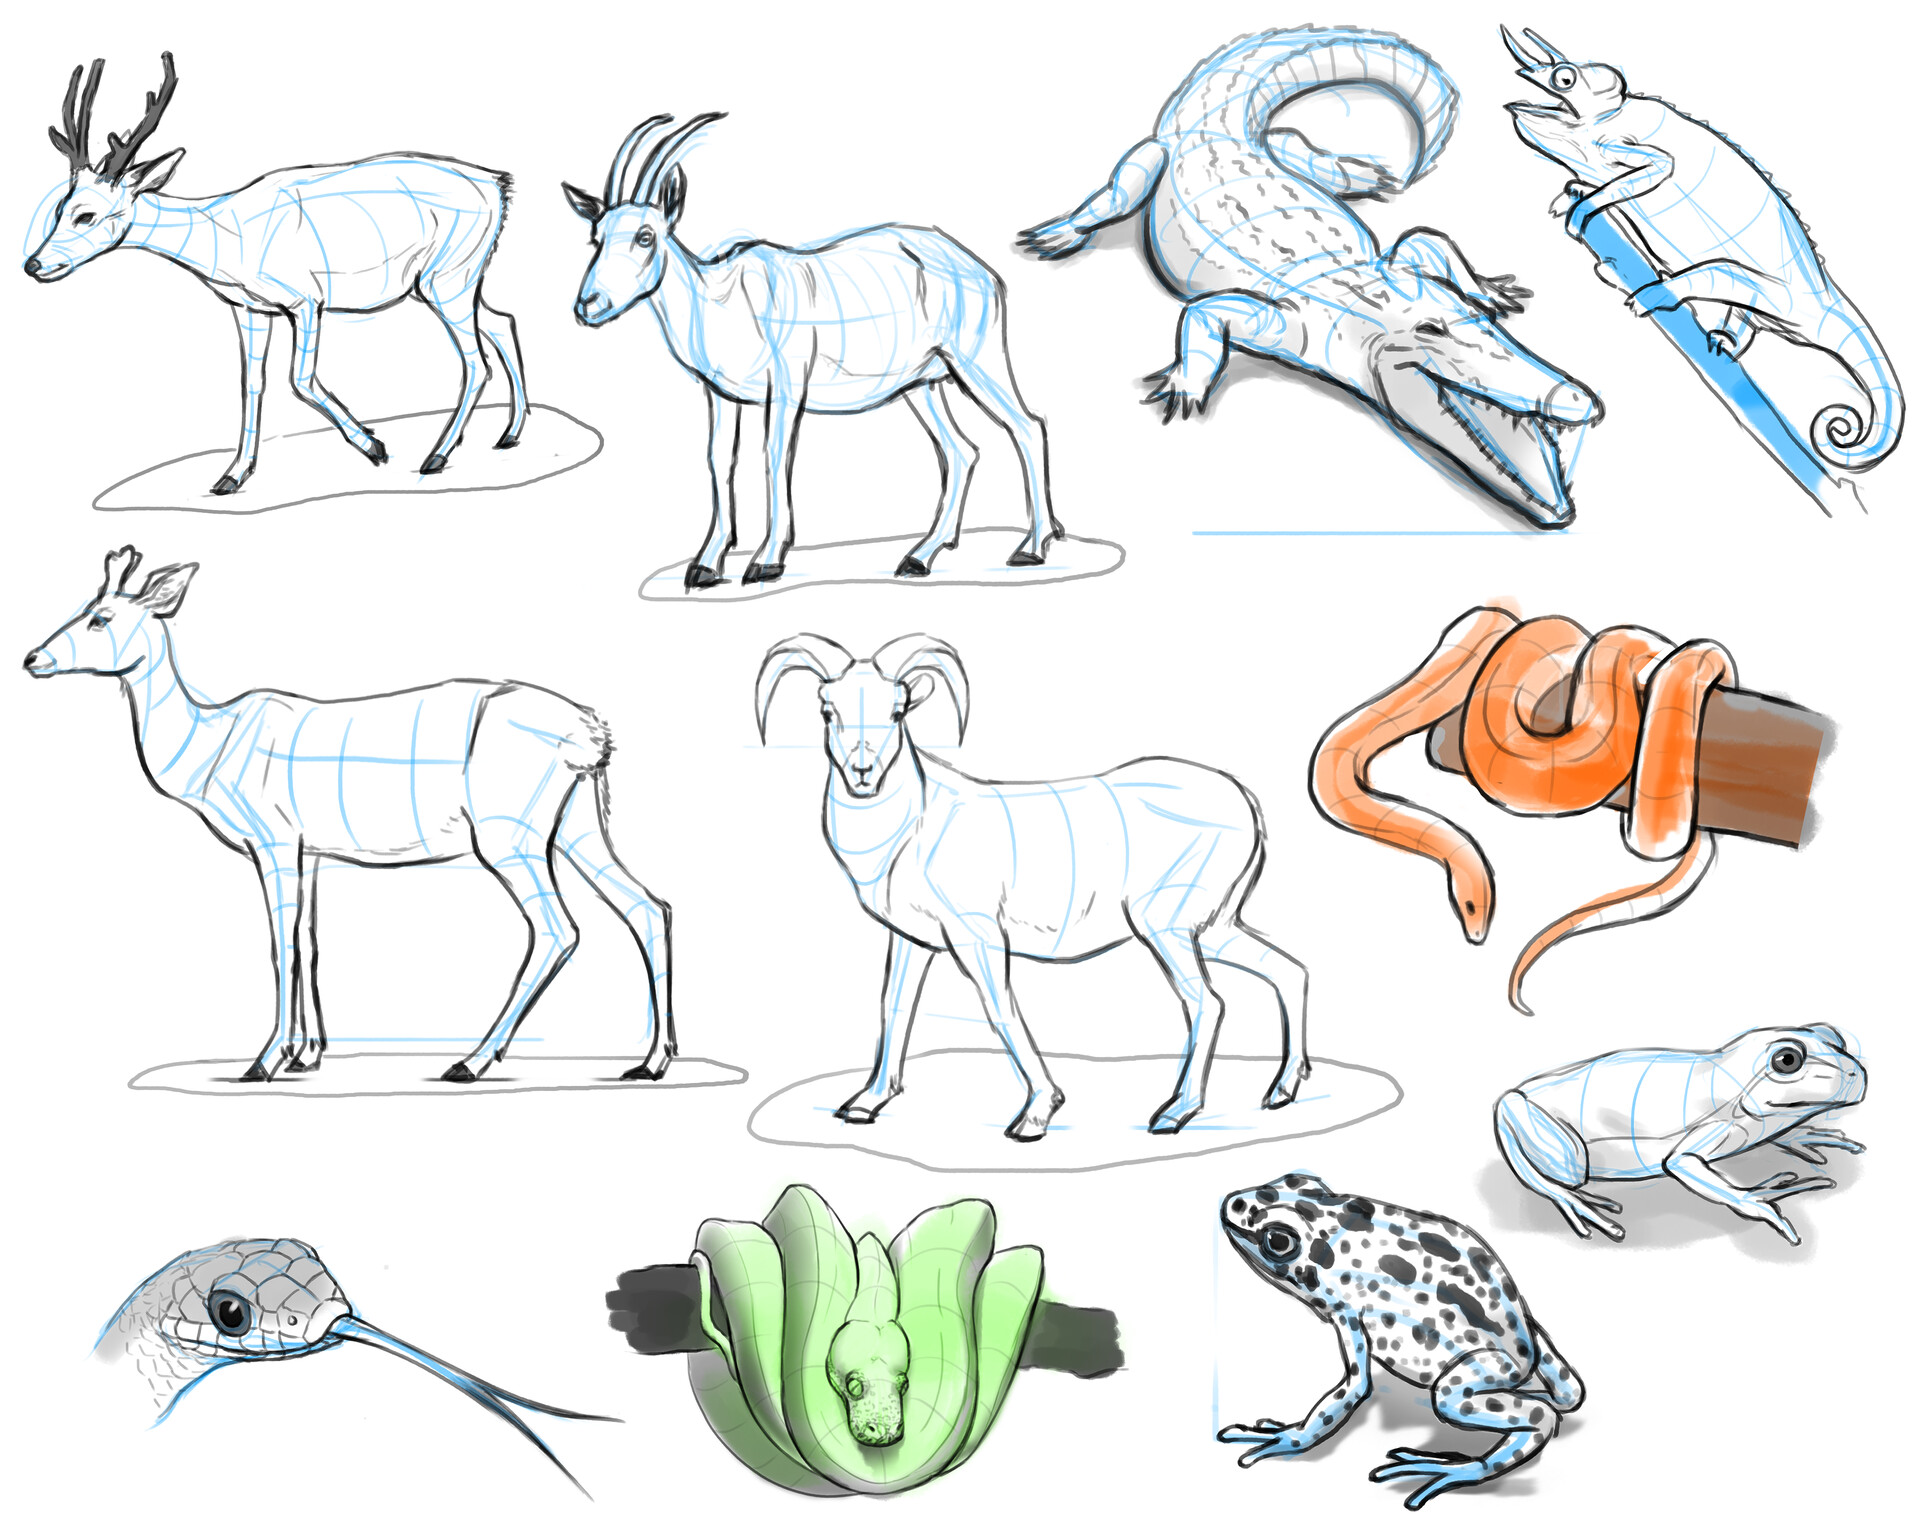 ArtStation - Animal Anatomy and Sketches